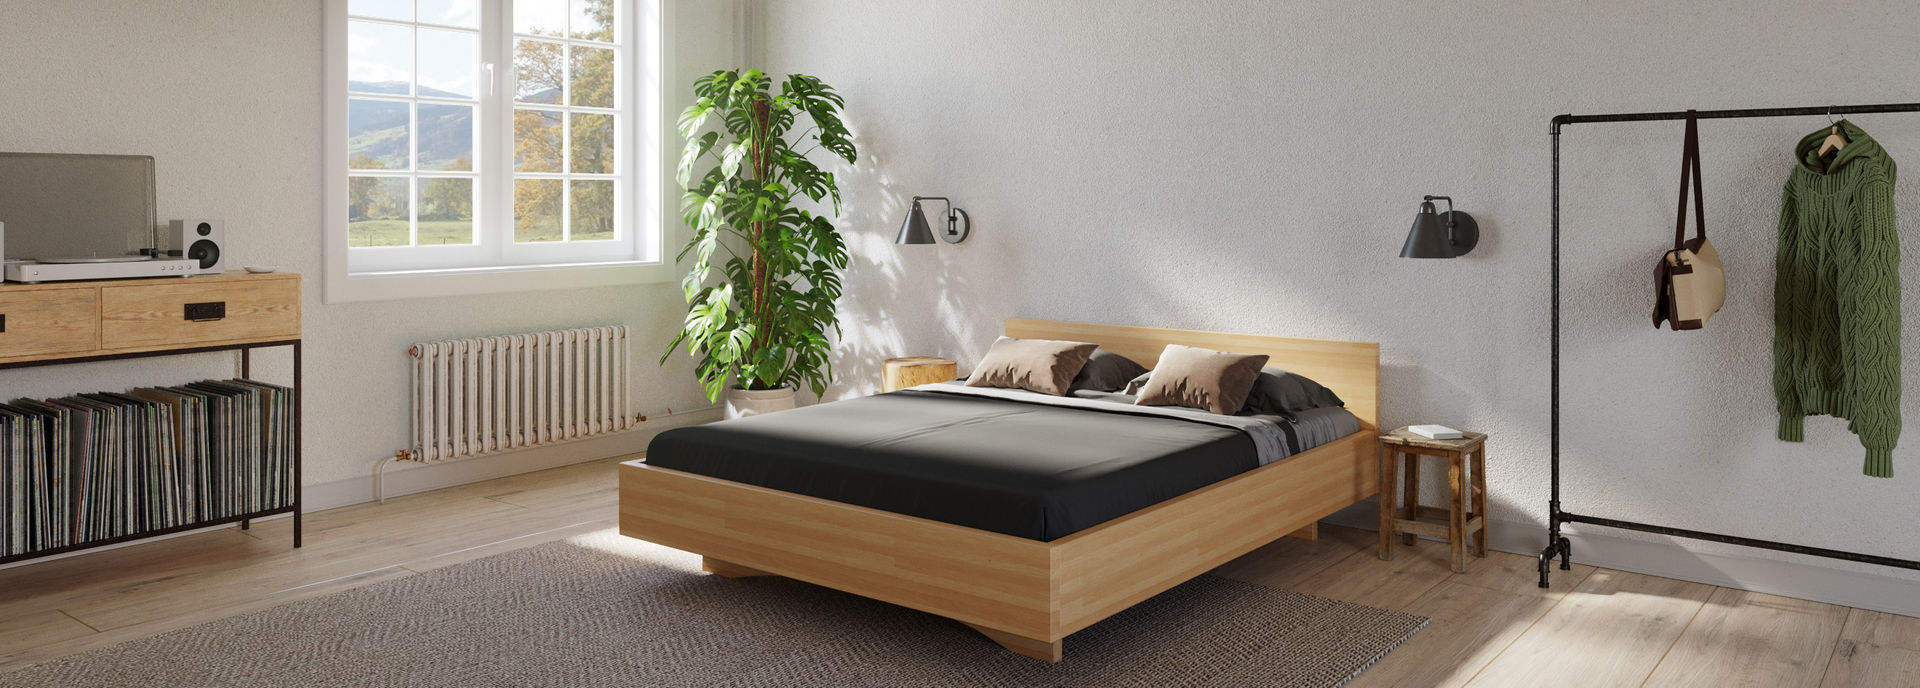 Betten - Massiv und Langlebig, Woodq UG (haftungsbeschränkt) Woodq UG (haftungsbeschränkt) Modern style bedroom Beds & headboards